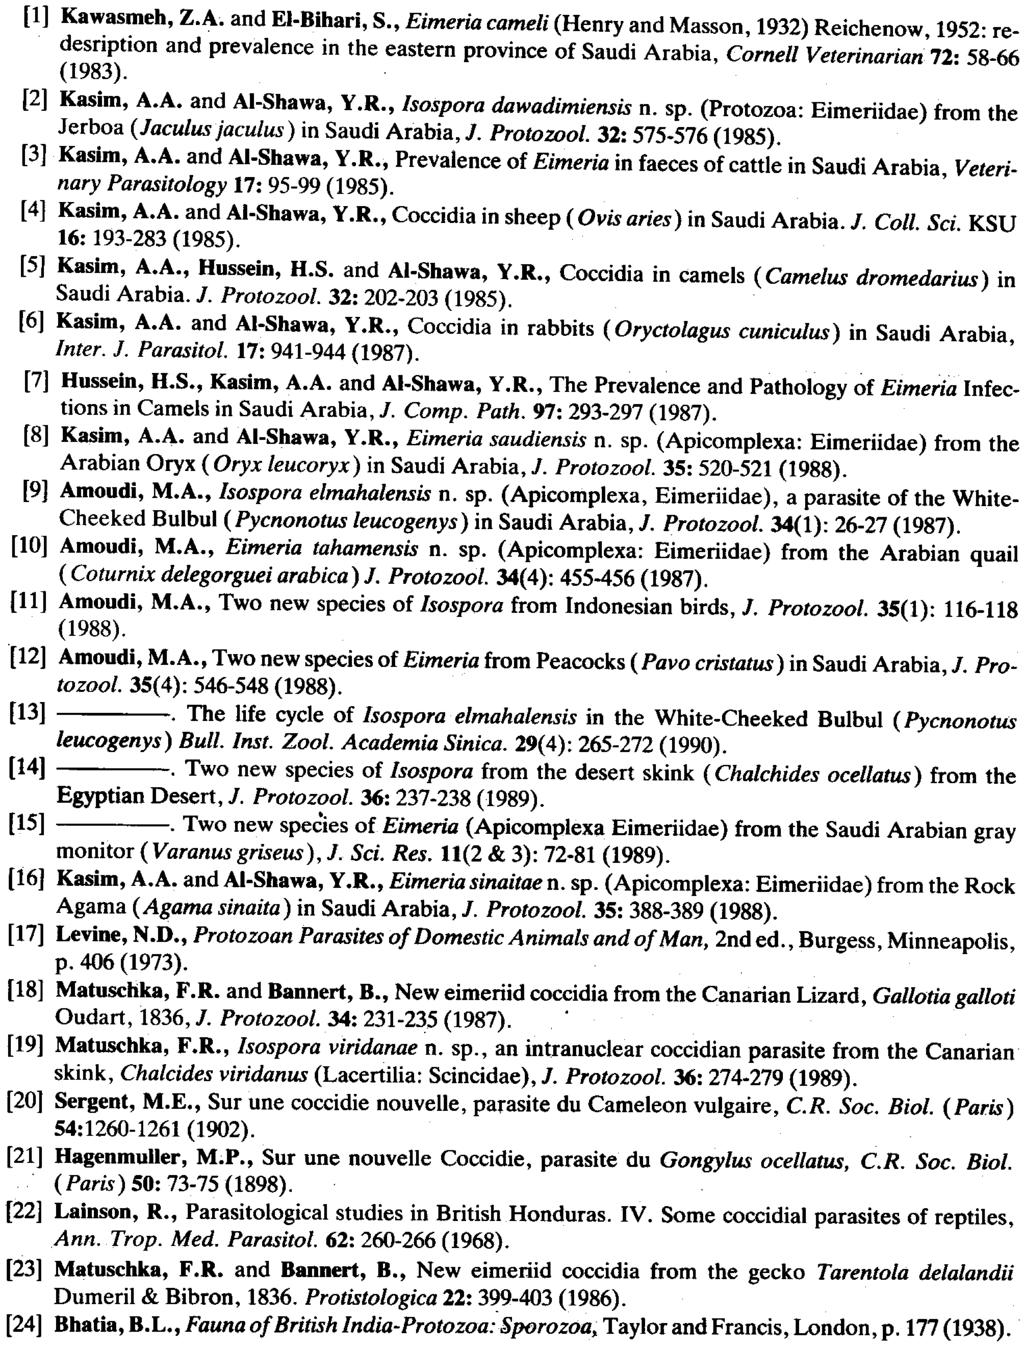 Isospora arabica n. sp. (Apicomplexa: Eimeriidae). 69 References [1] Kawasmeh, Z.A. and EI-Bihari, S.